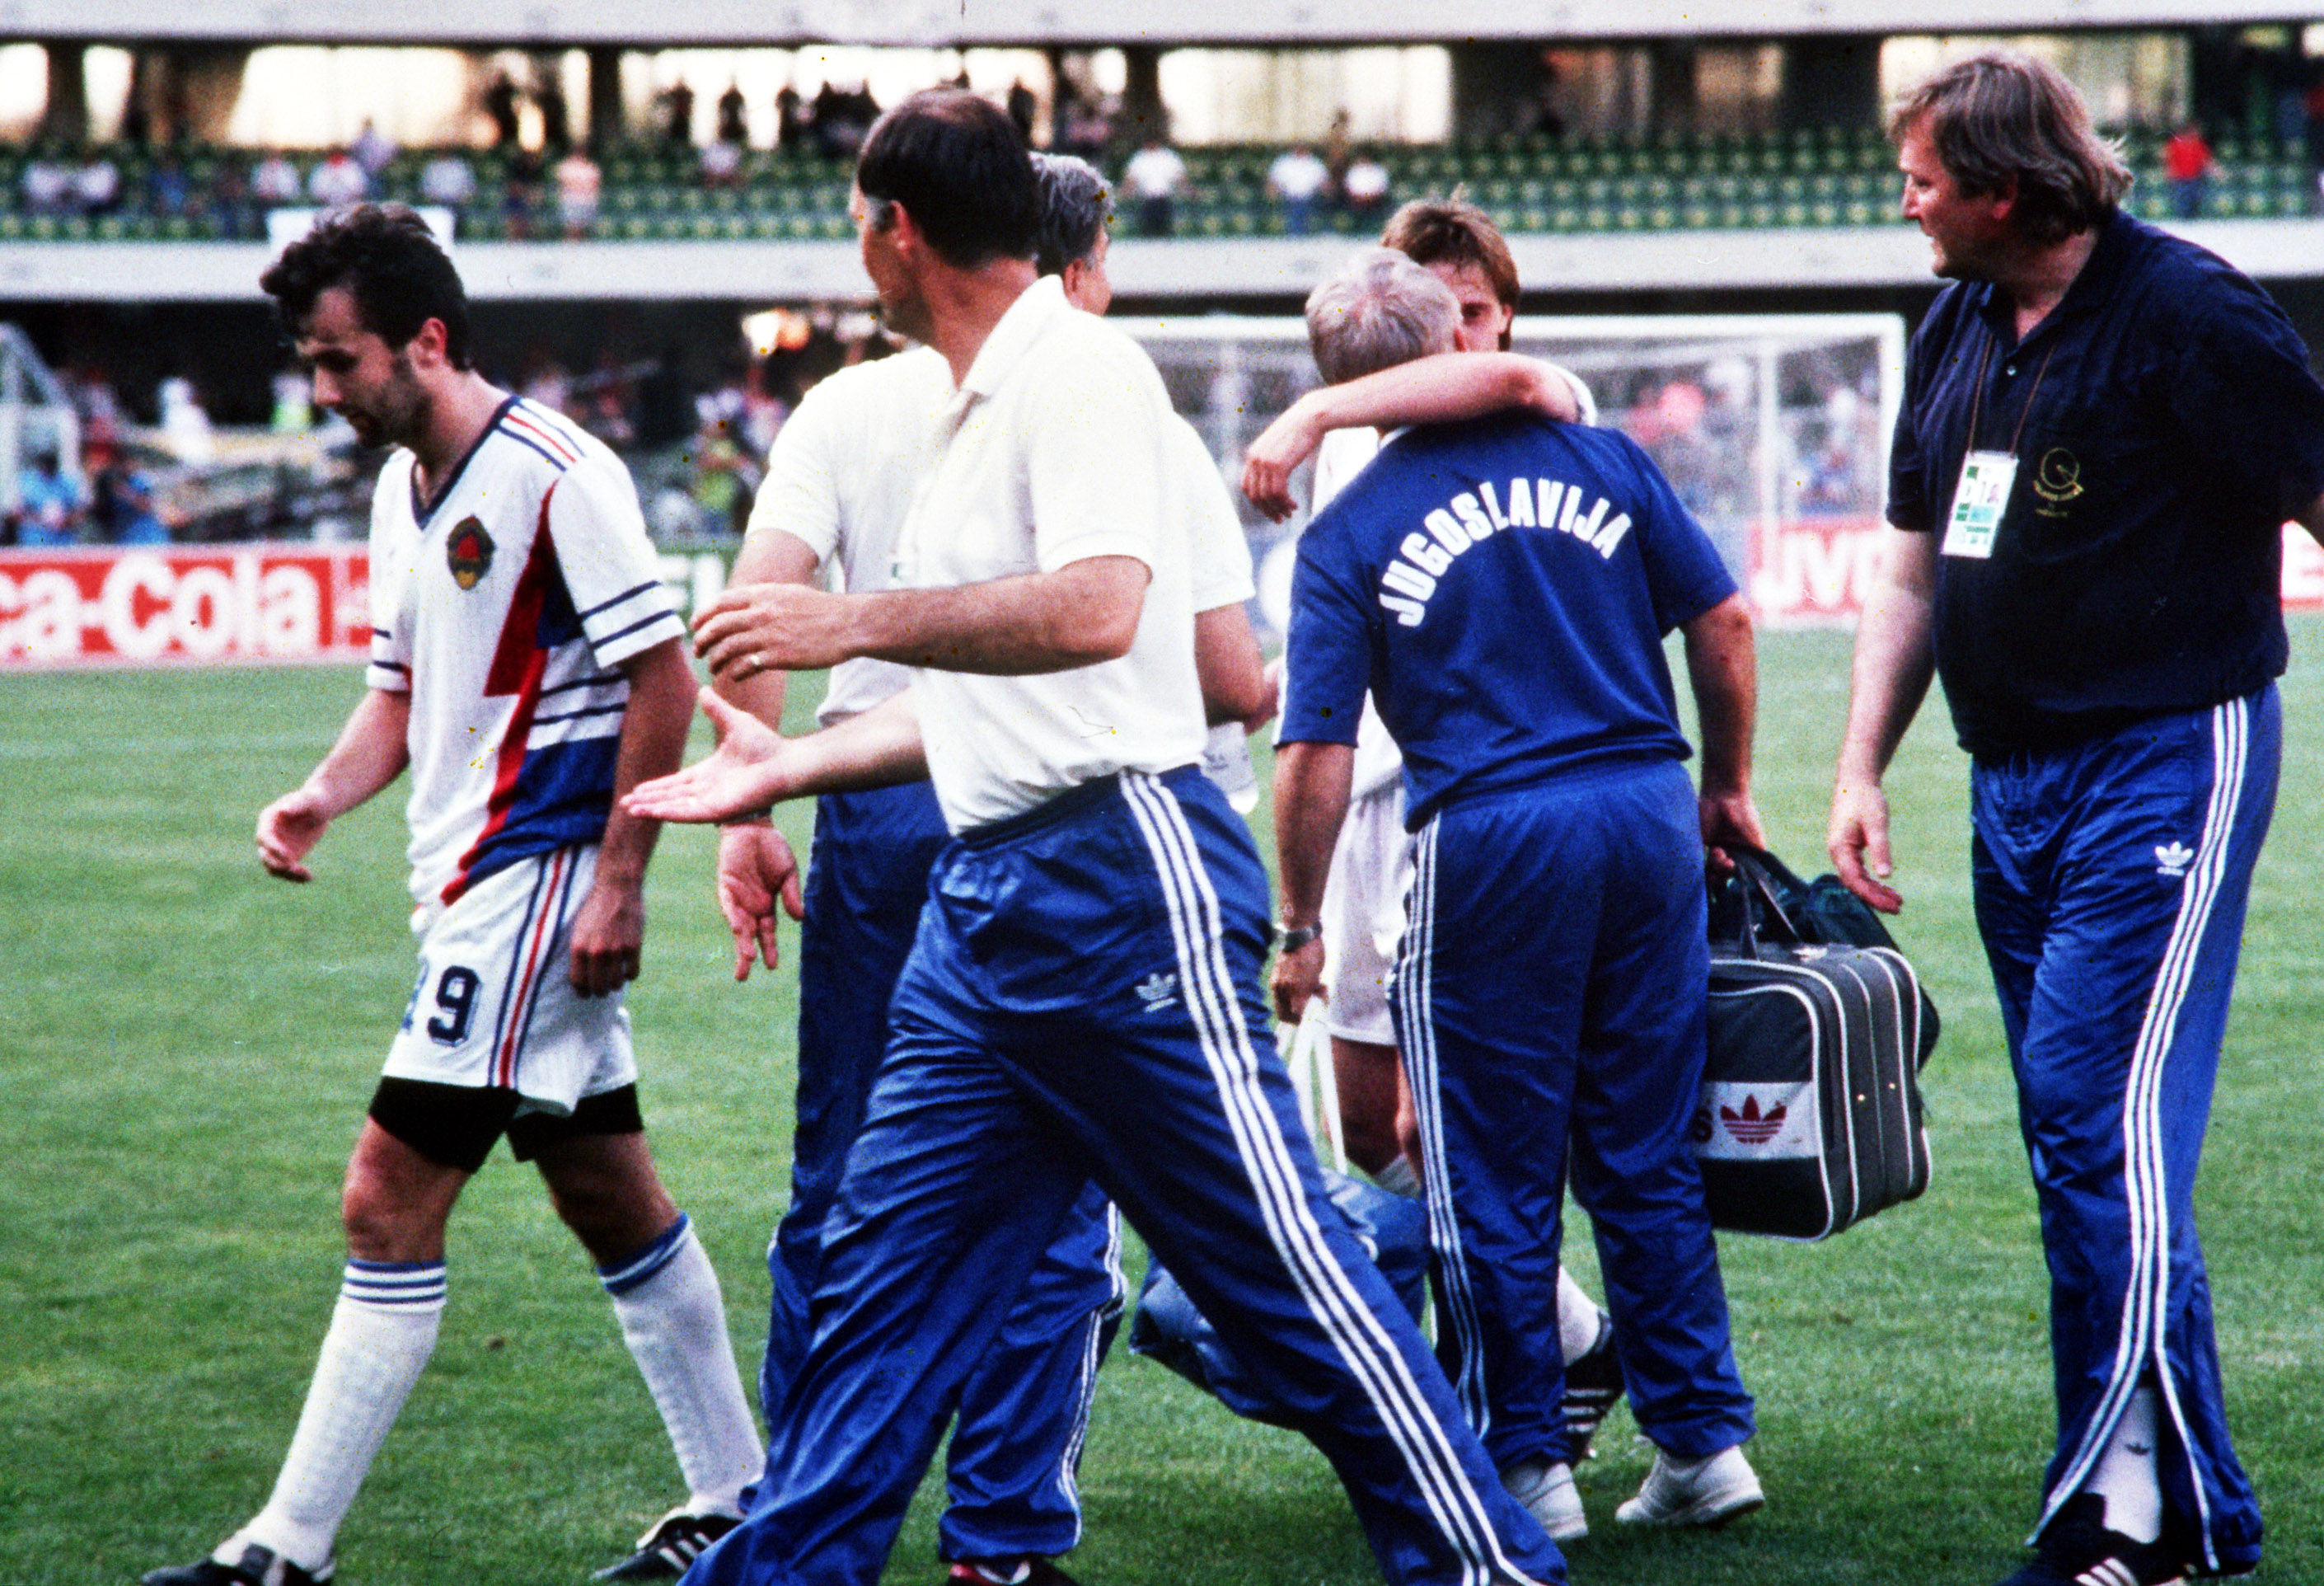 Posle pobede nad Španijom 2:1 na Svetskom prvenstvu u Italiji 1990. (©MN Press)